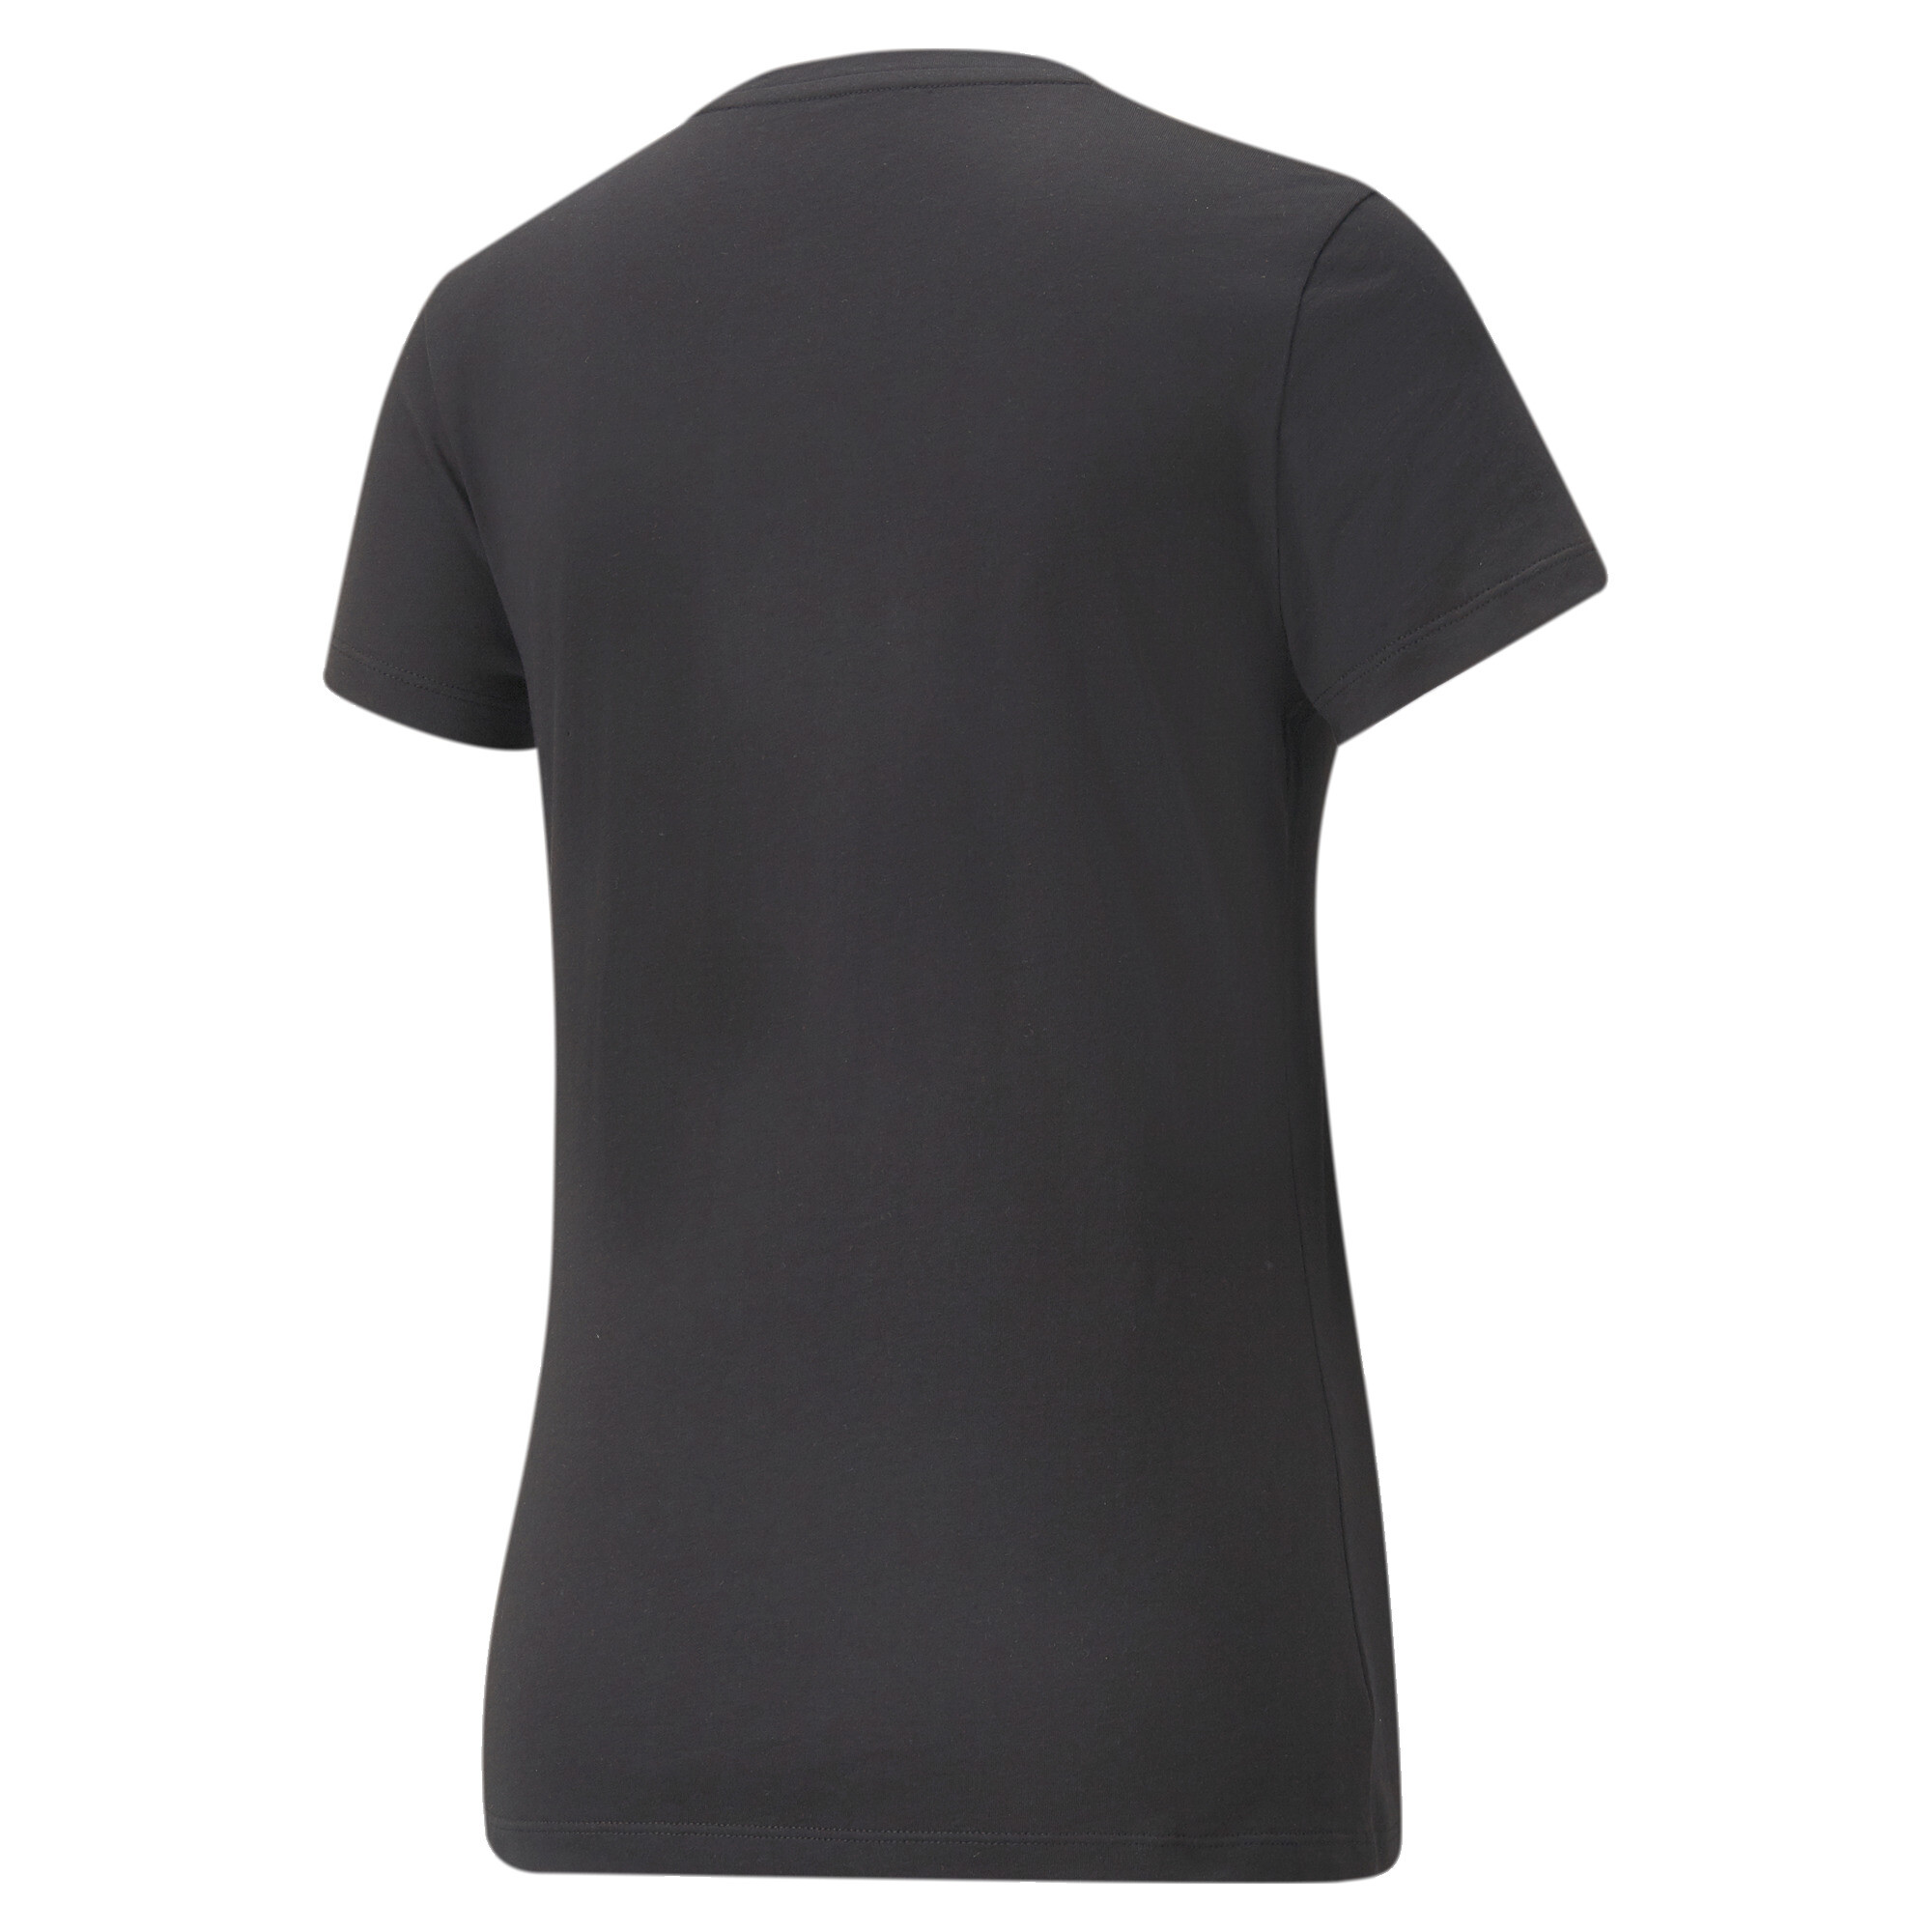 Women's PUMA Essentials+ Metallic Logo T-Shirt In Black/Gold, Size Small